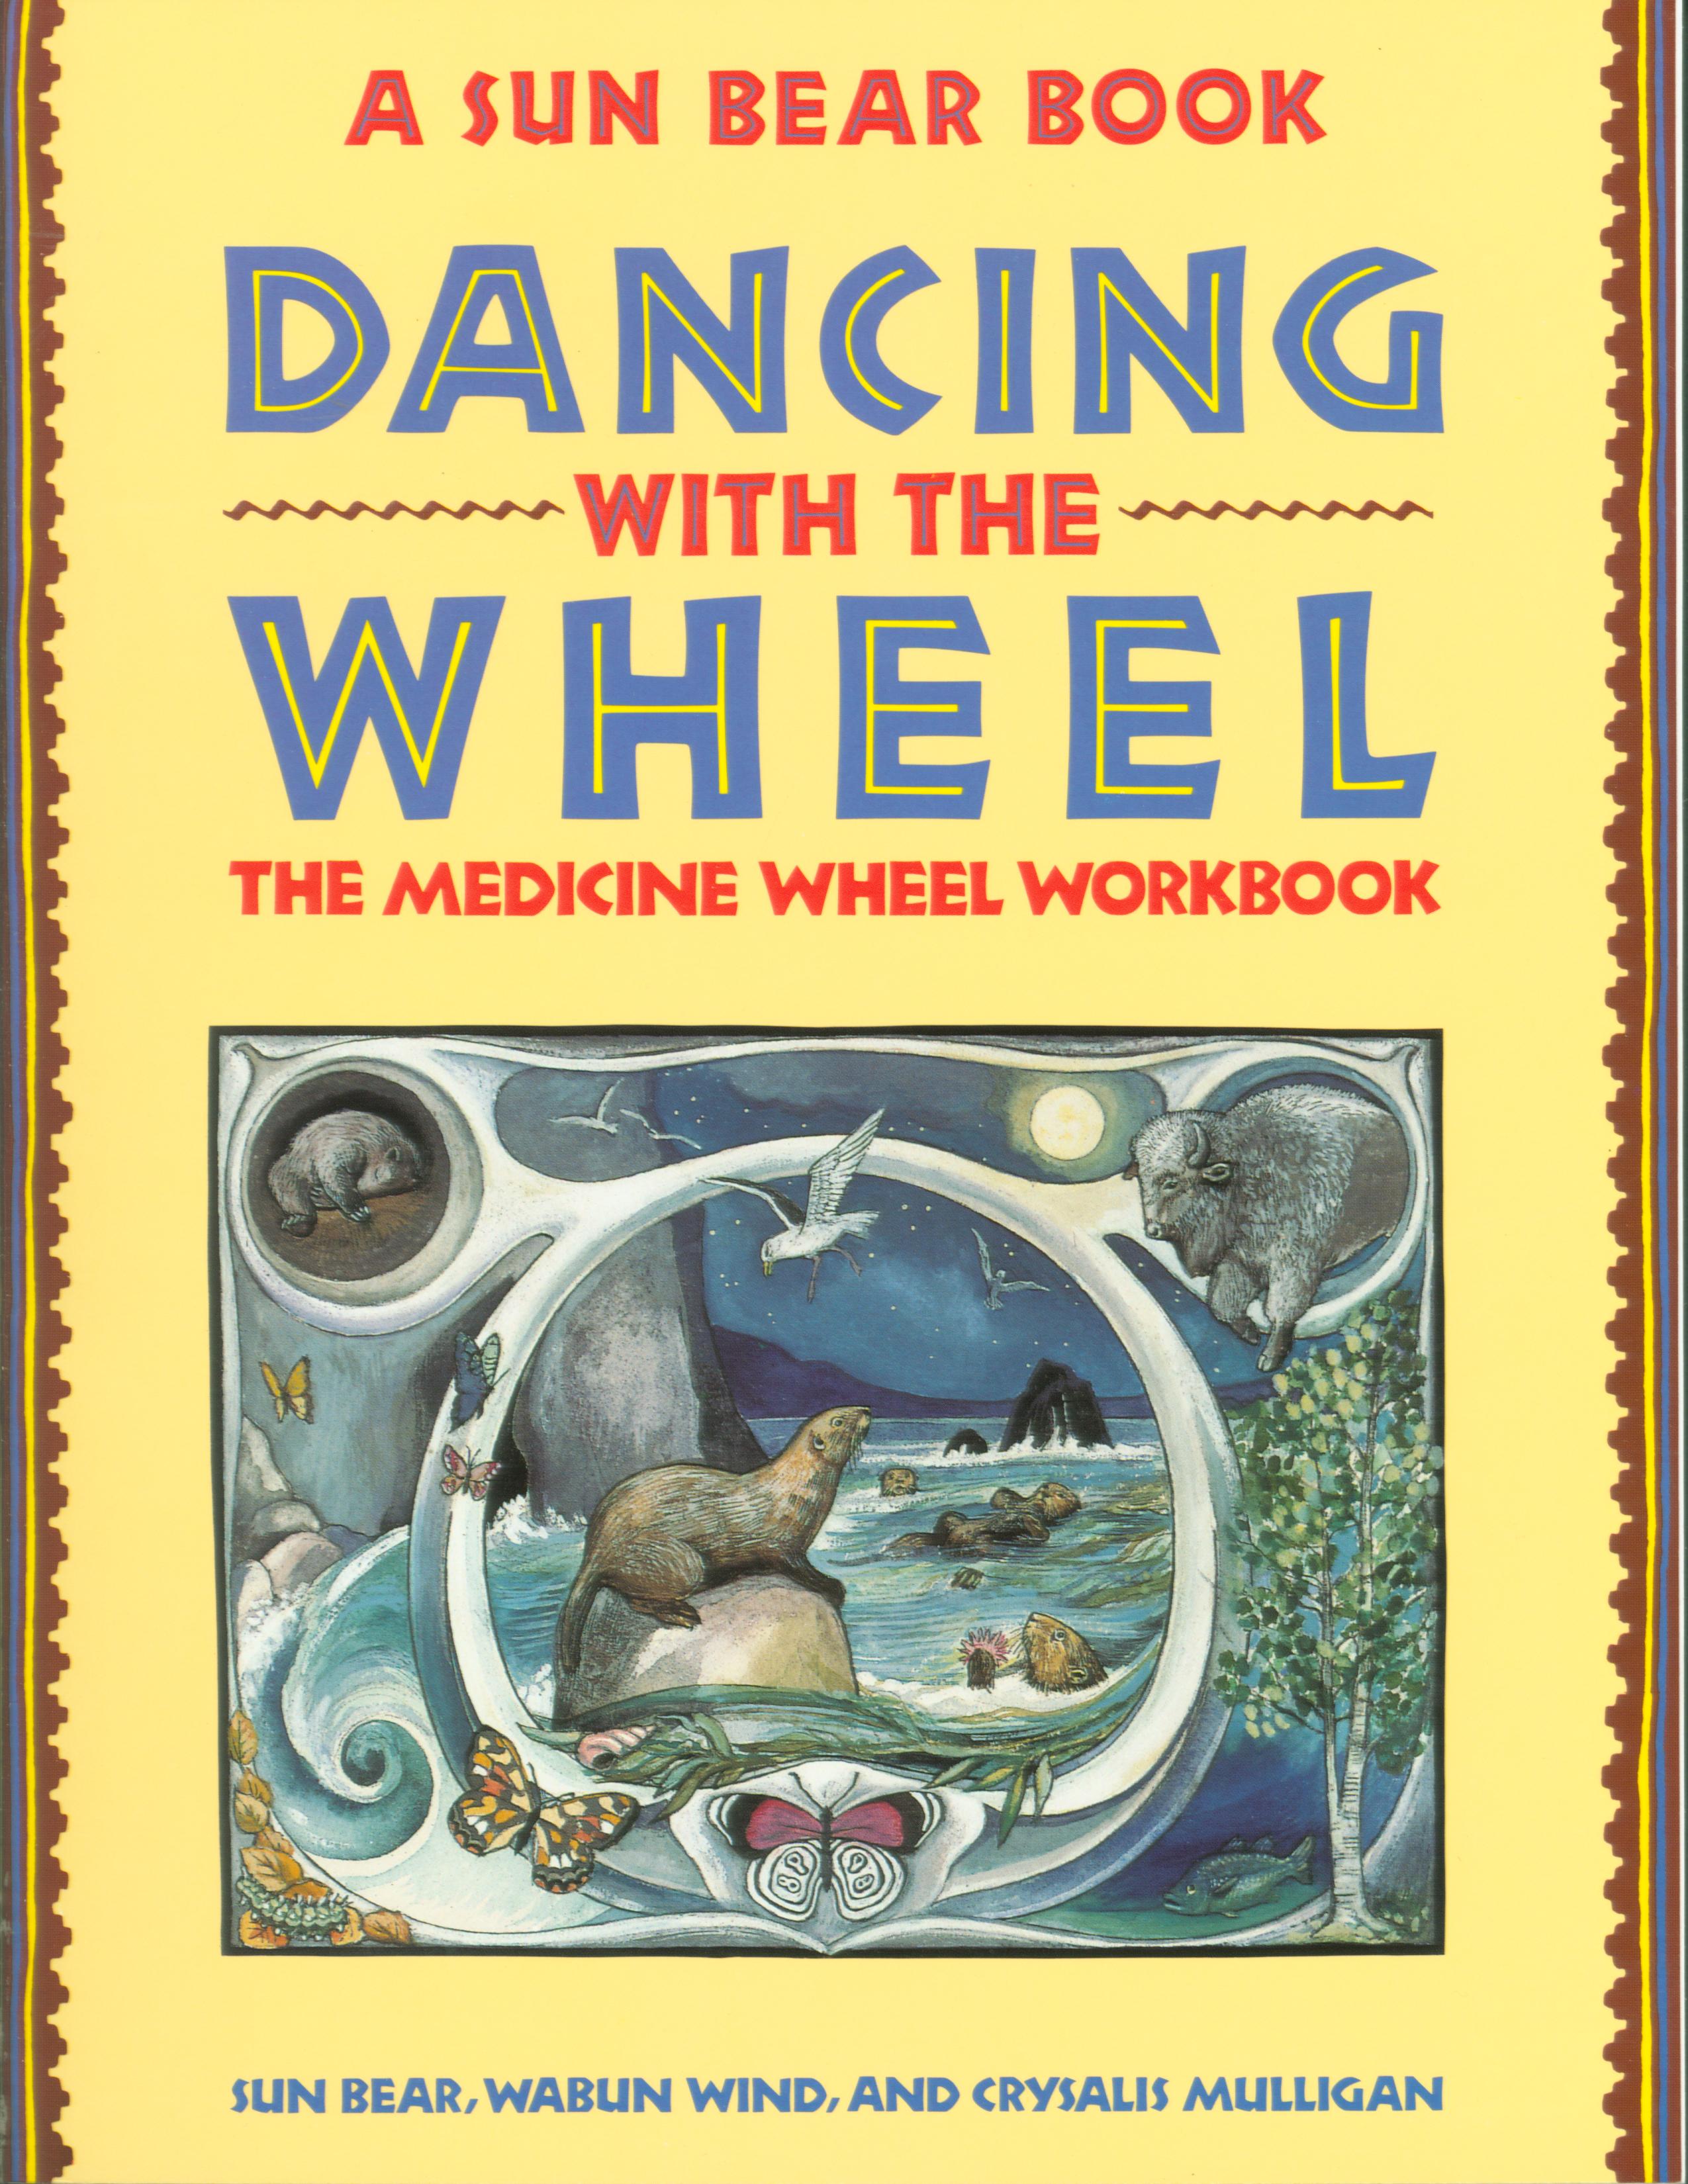 DanciNG WITH THE WHEEL: the Medicine Wheel workbook. 